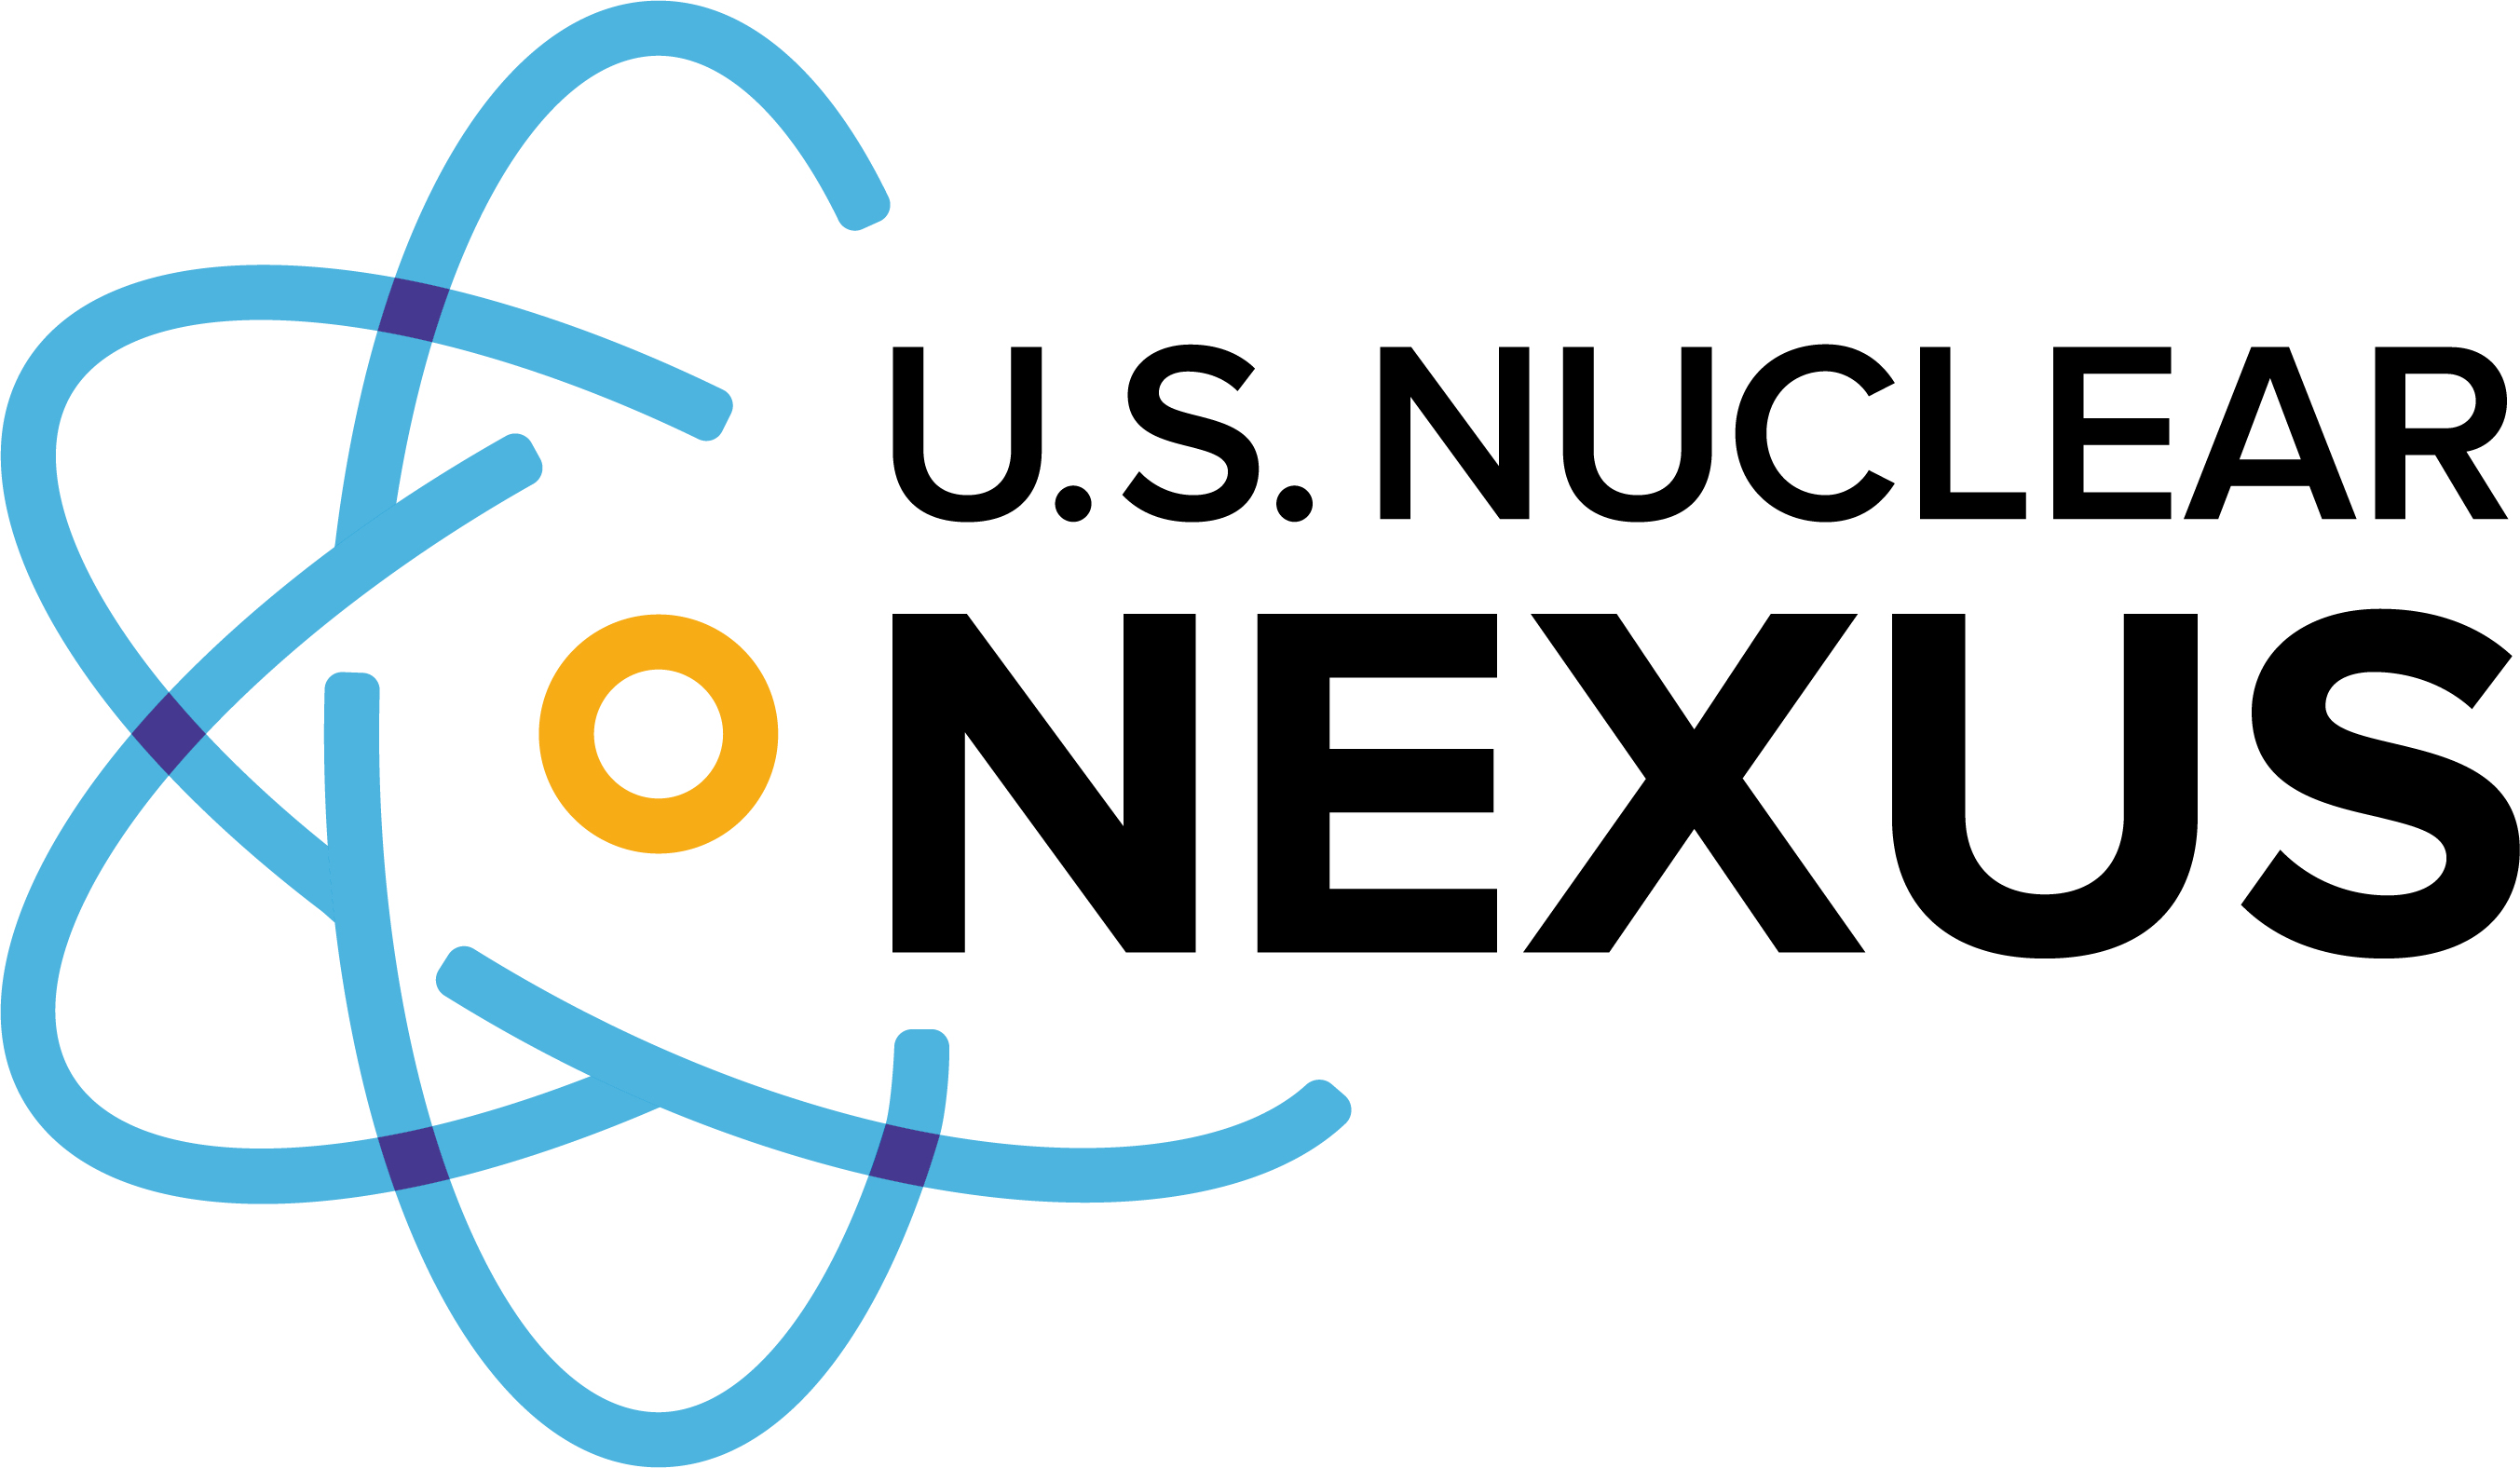 U.S. Nuclear Nexus